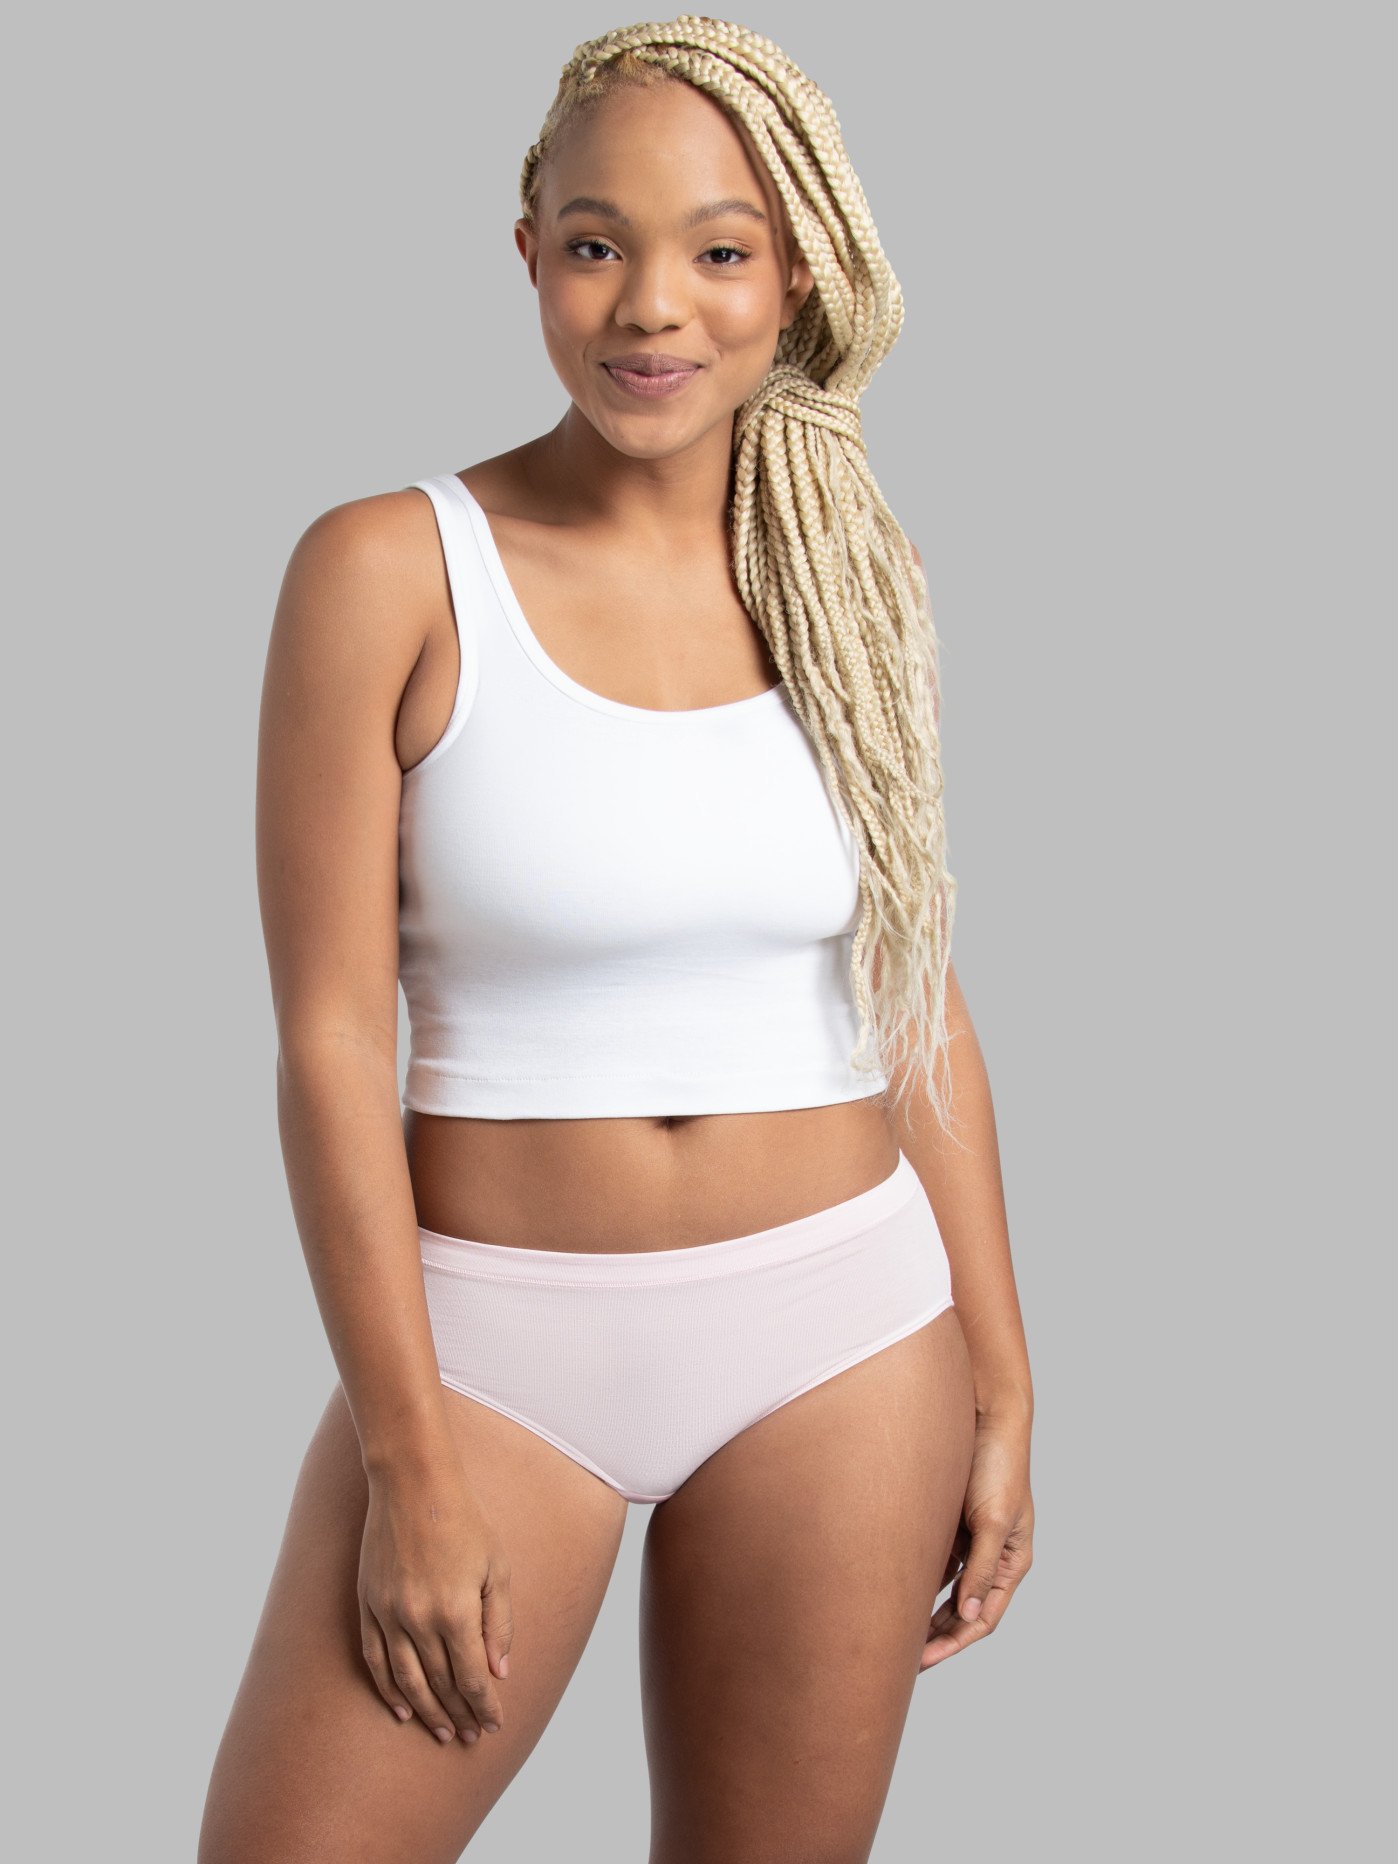 Women's Nylon/Spandex Underwear - Assorted Colors, Sizes 8-10